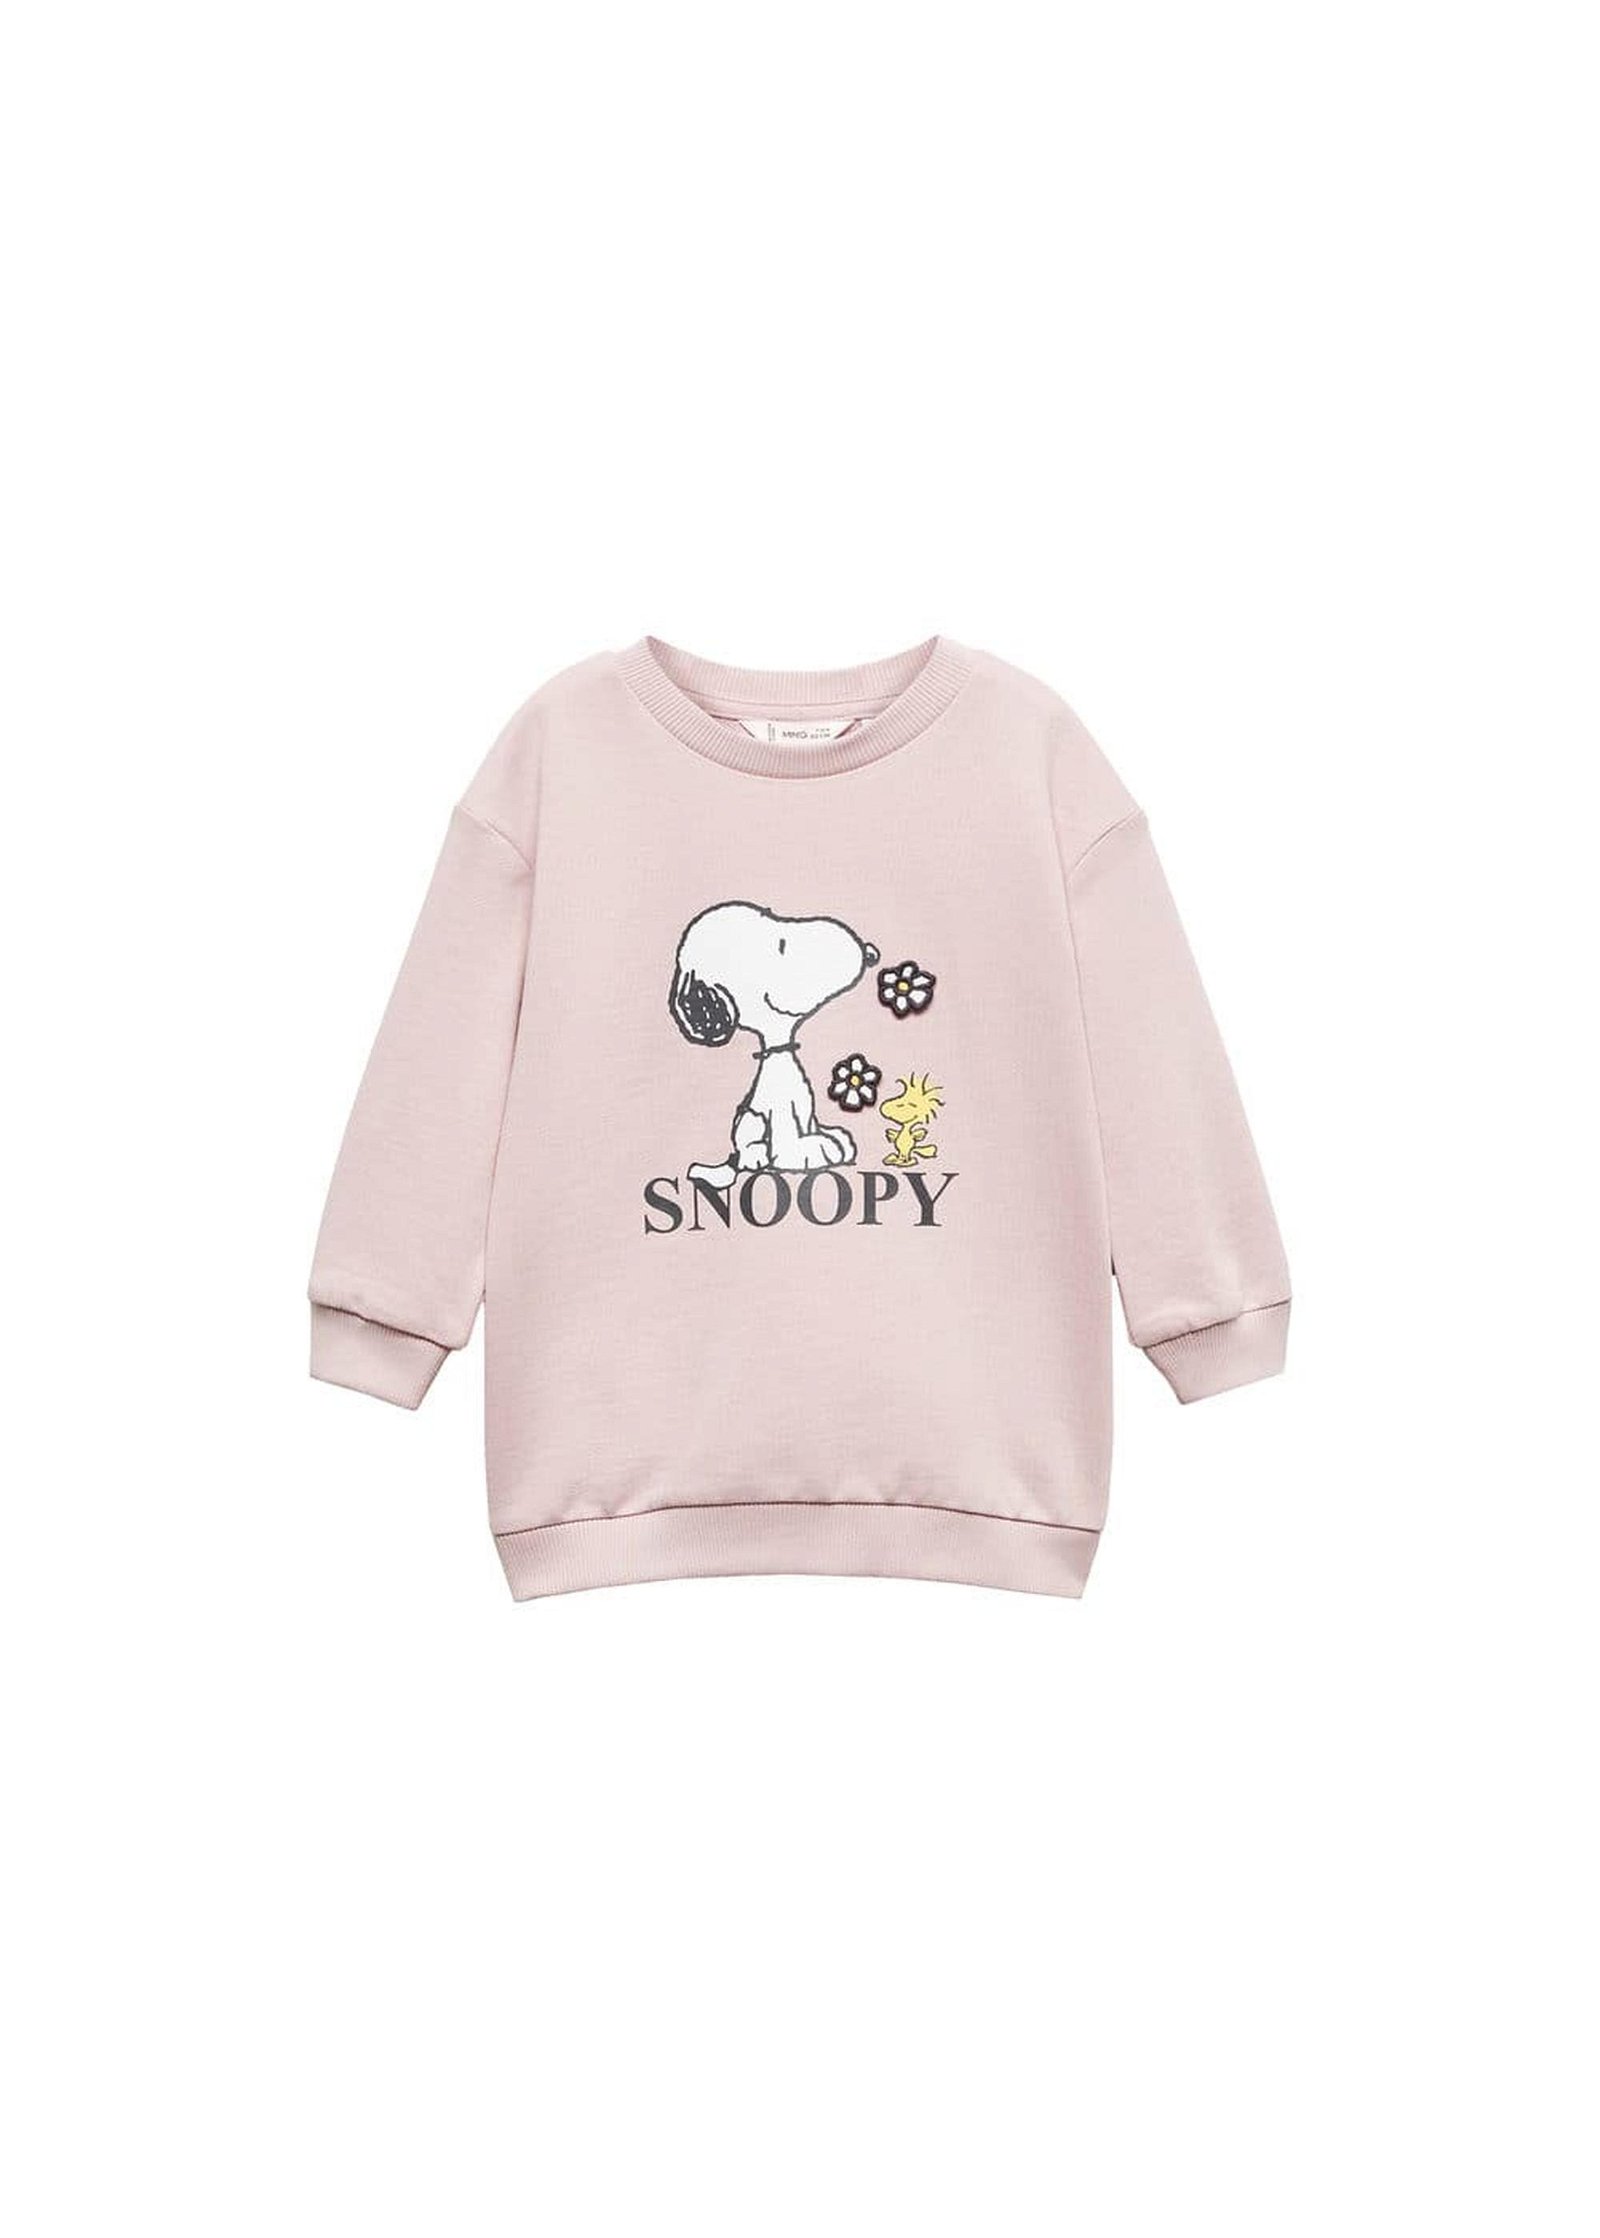 Mango Çocuk Snoopy Sweatshirt Elbise Açık/Pastel Mor